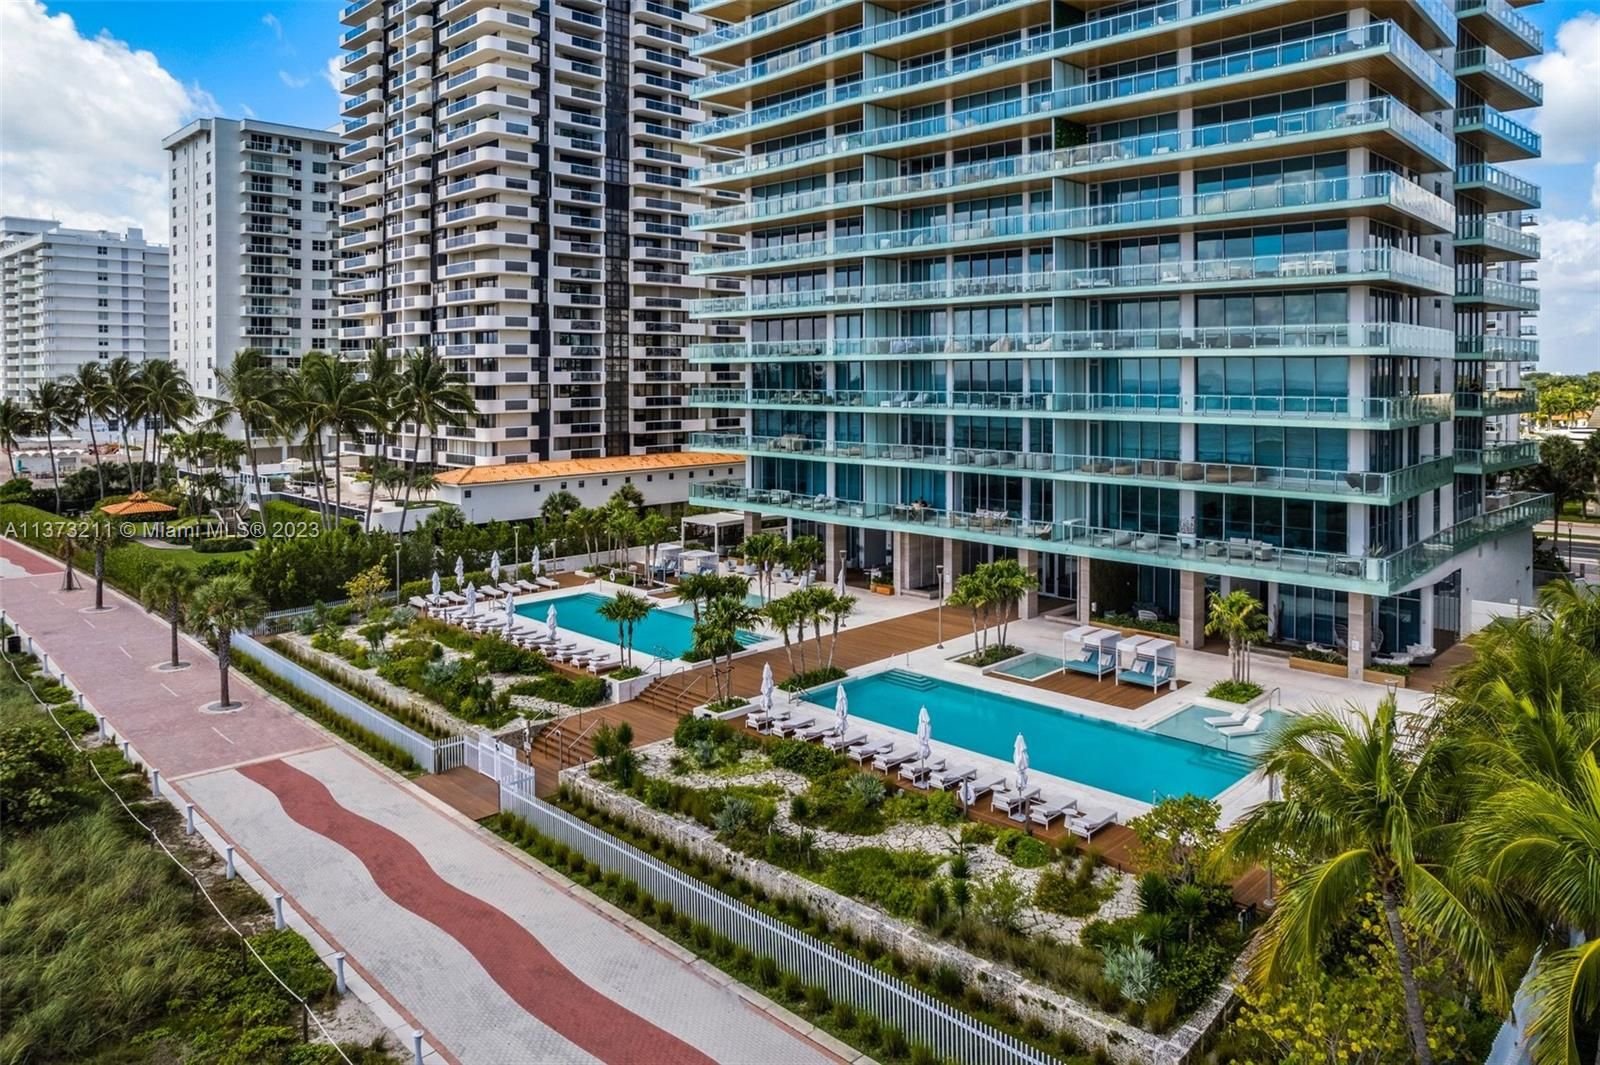 Real estate property located at 5775 Collins Ave #504, Miami-Dade County, Miami Beach, FL